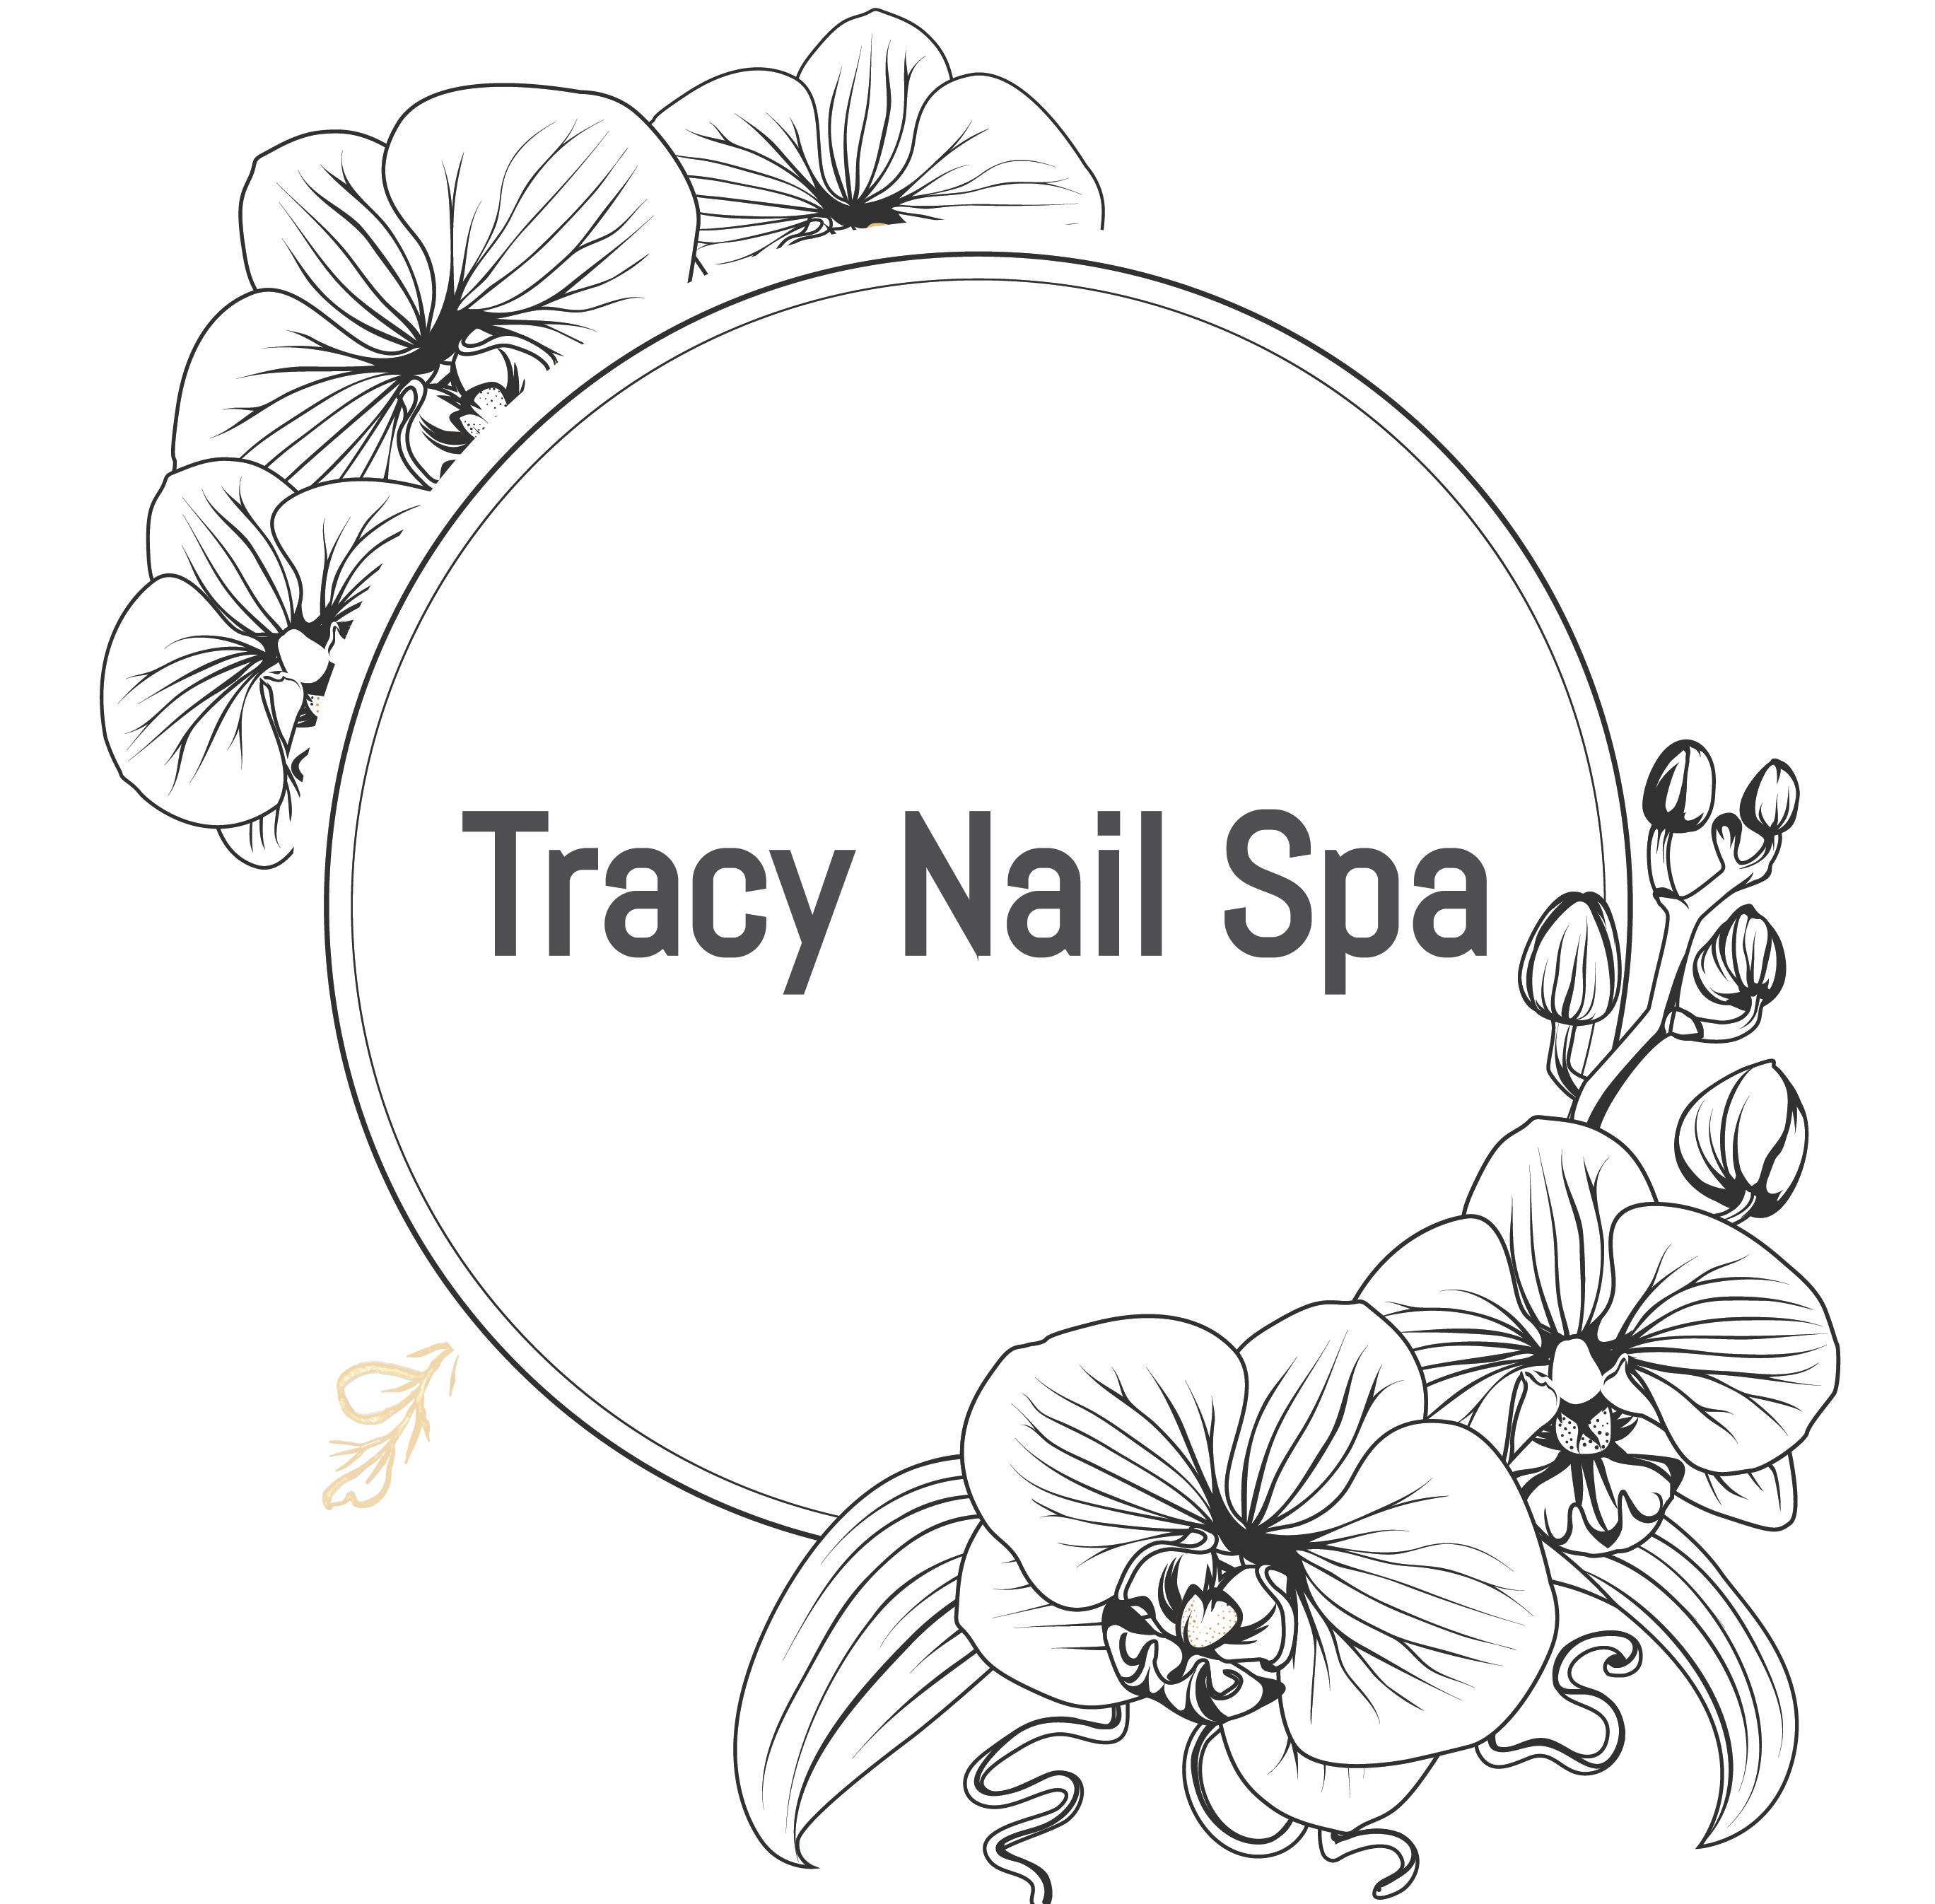 Tracy Nail Spa